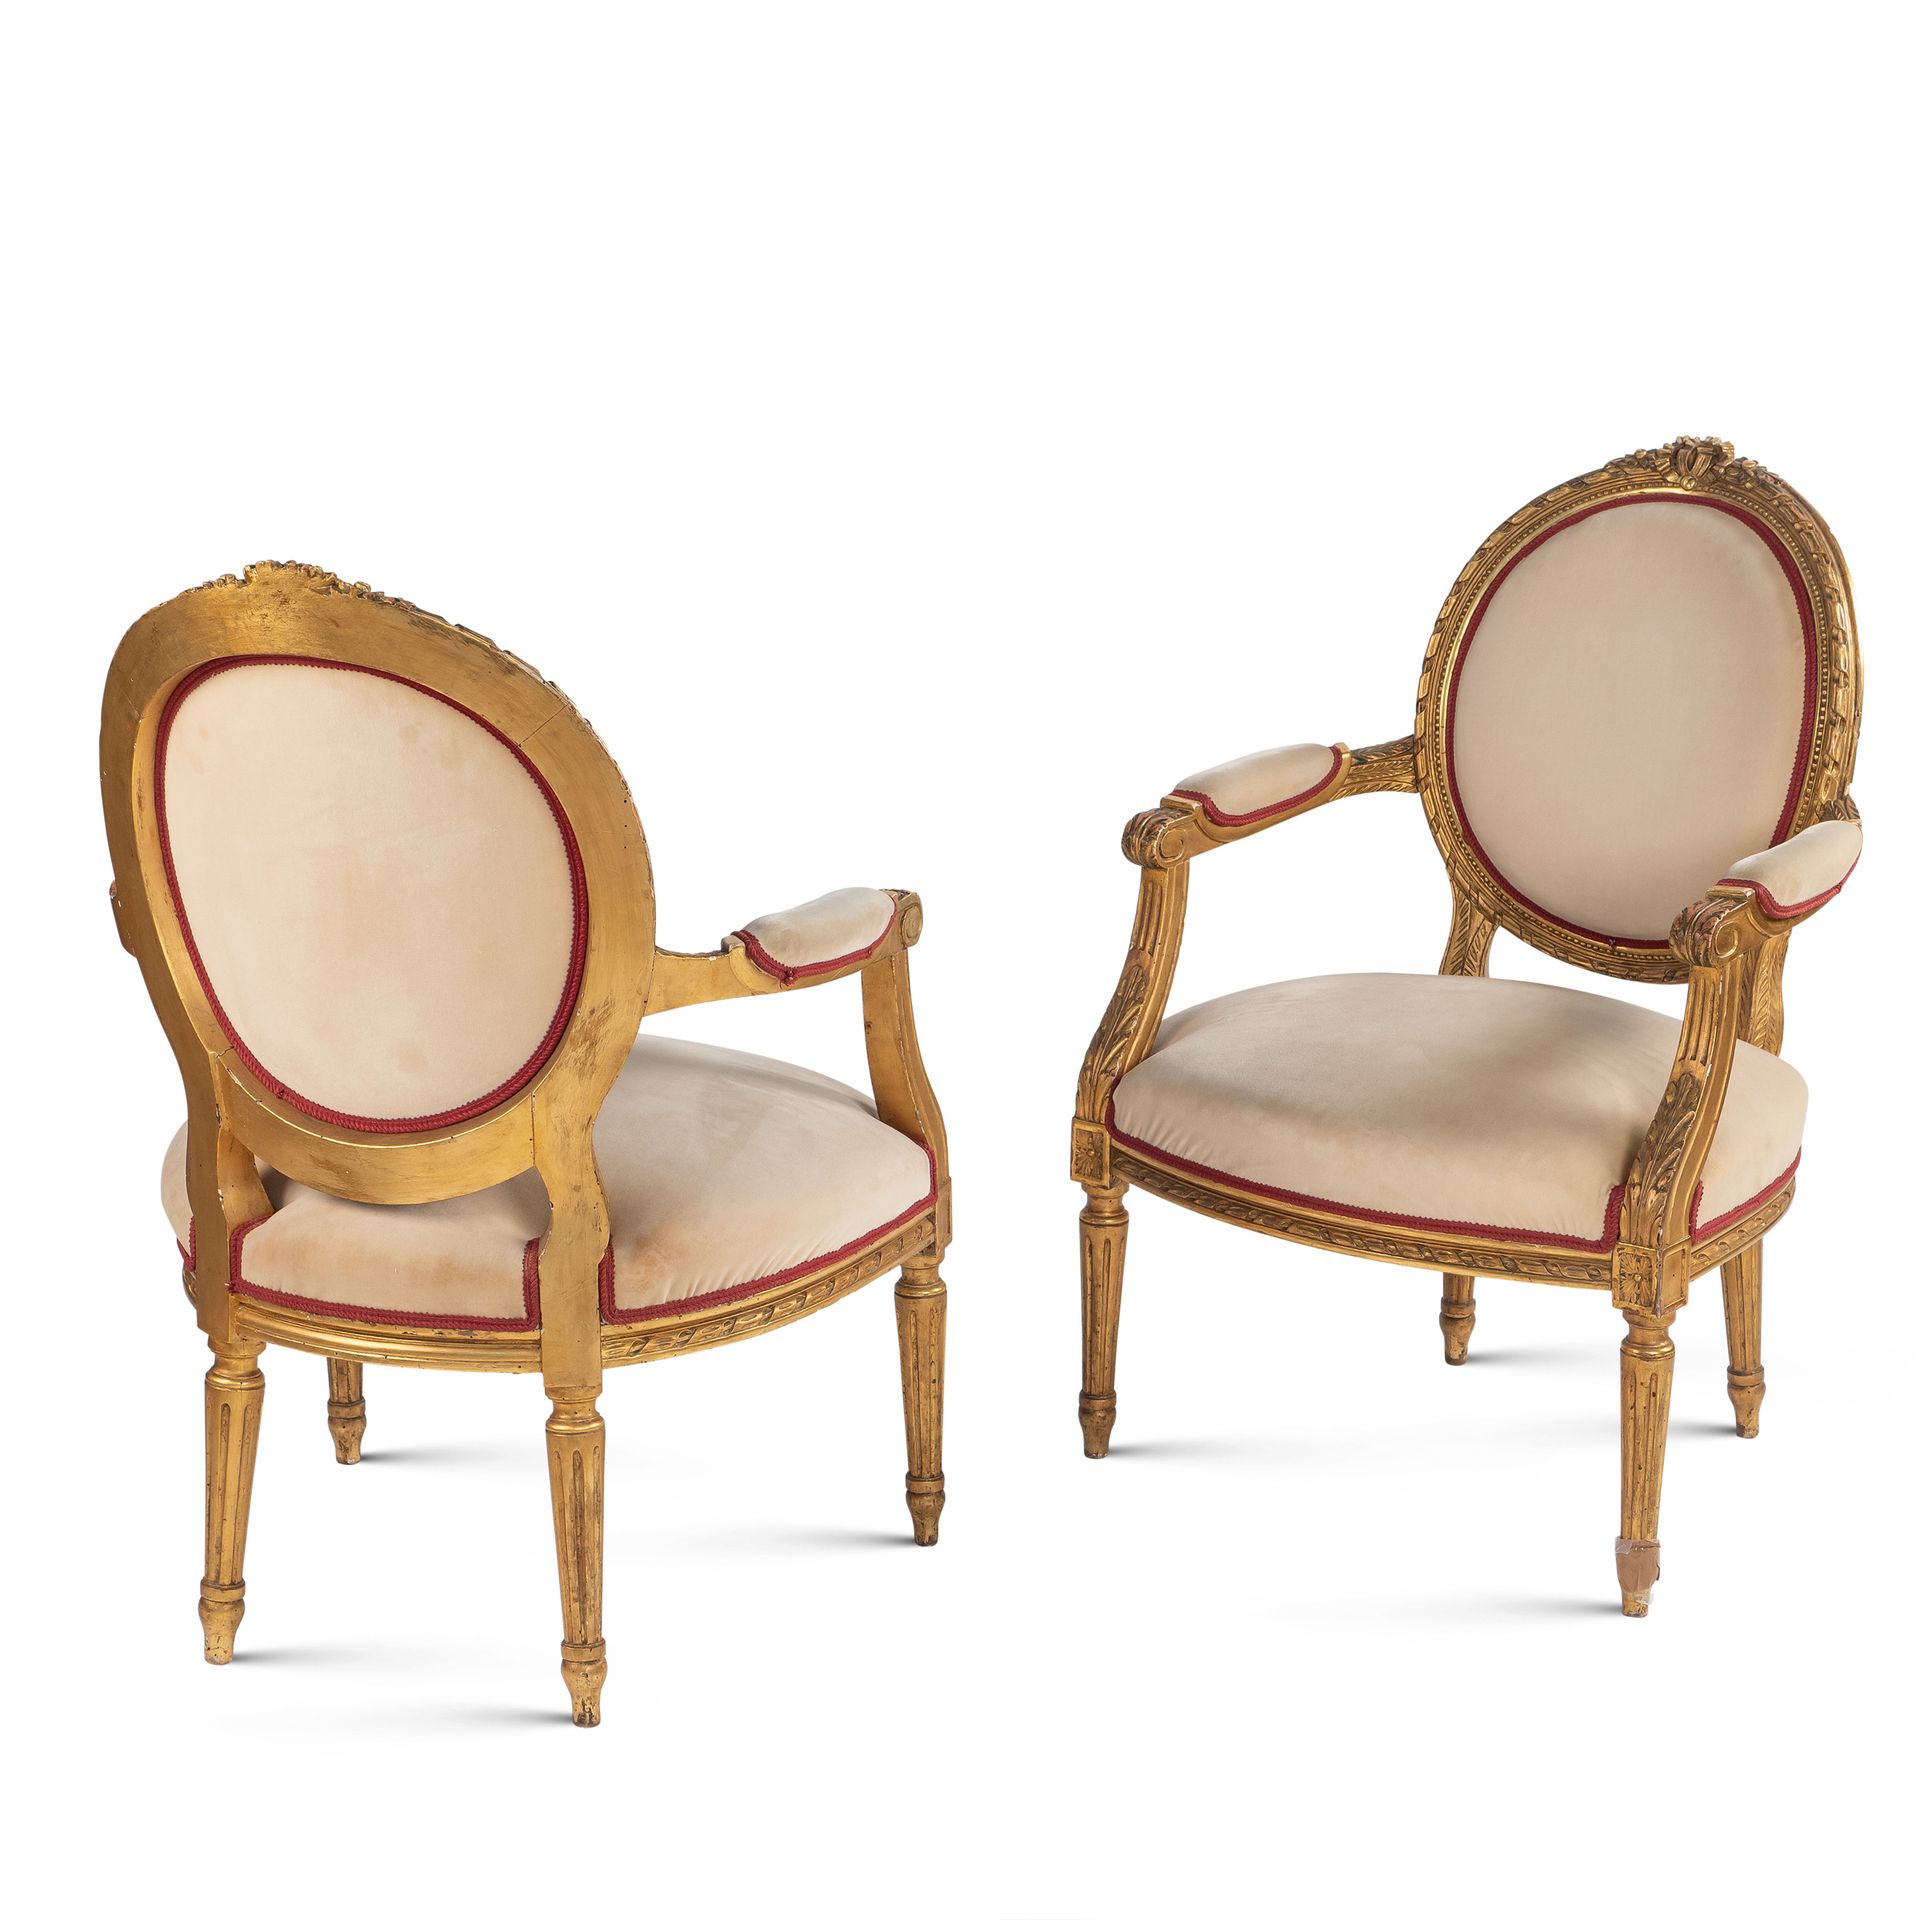 Pair of gilt wood armchairs France, 19th-20th century 83x63x56 cm. Sitze und Rüc&hellip;